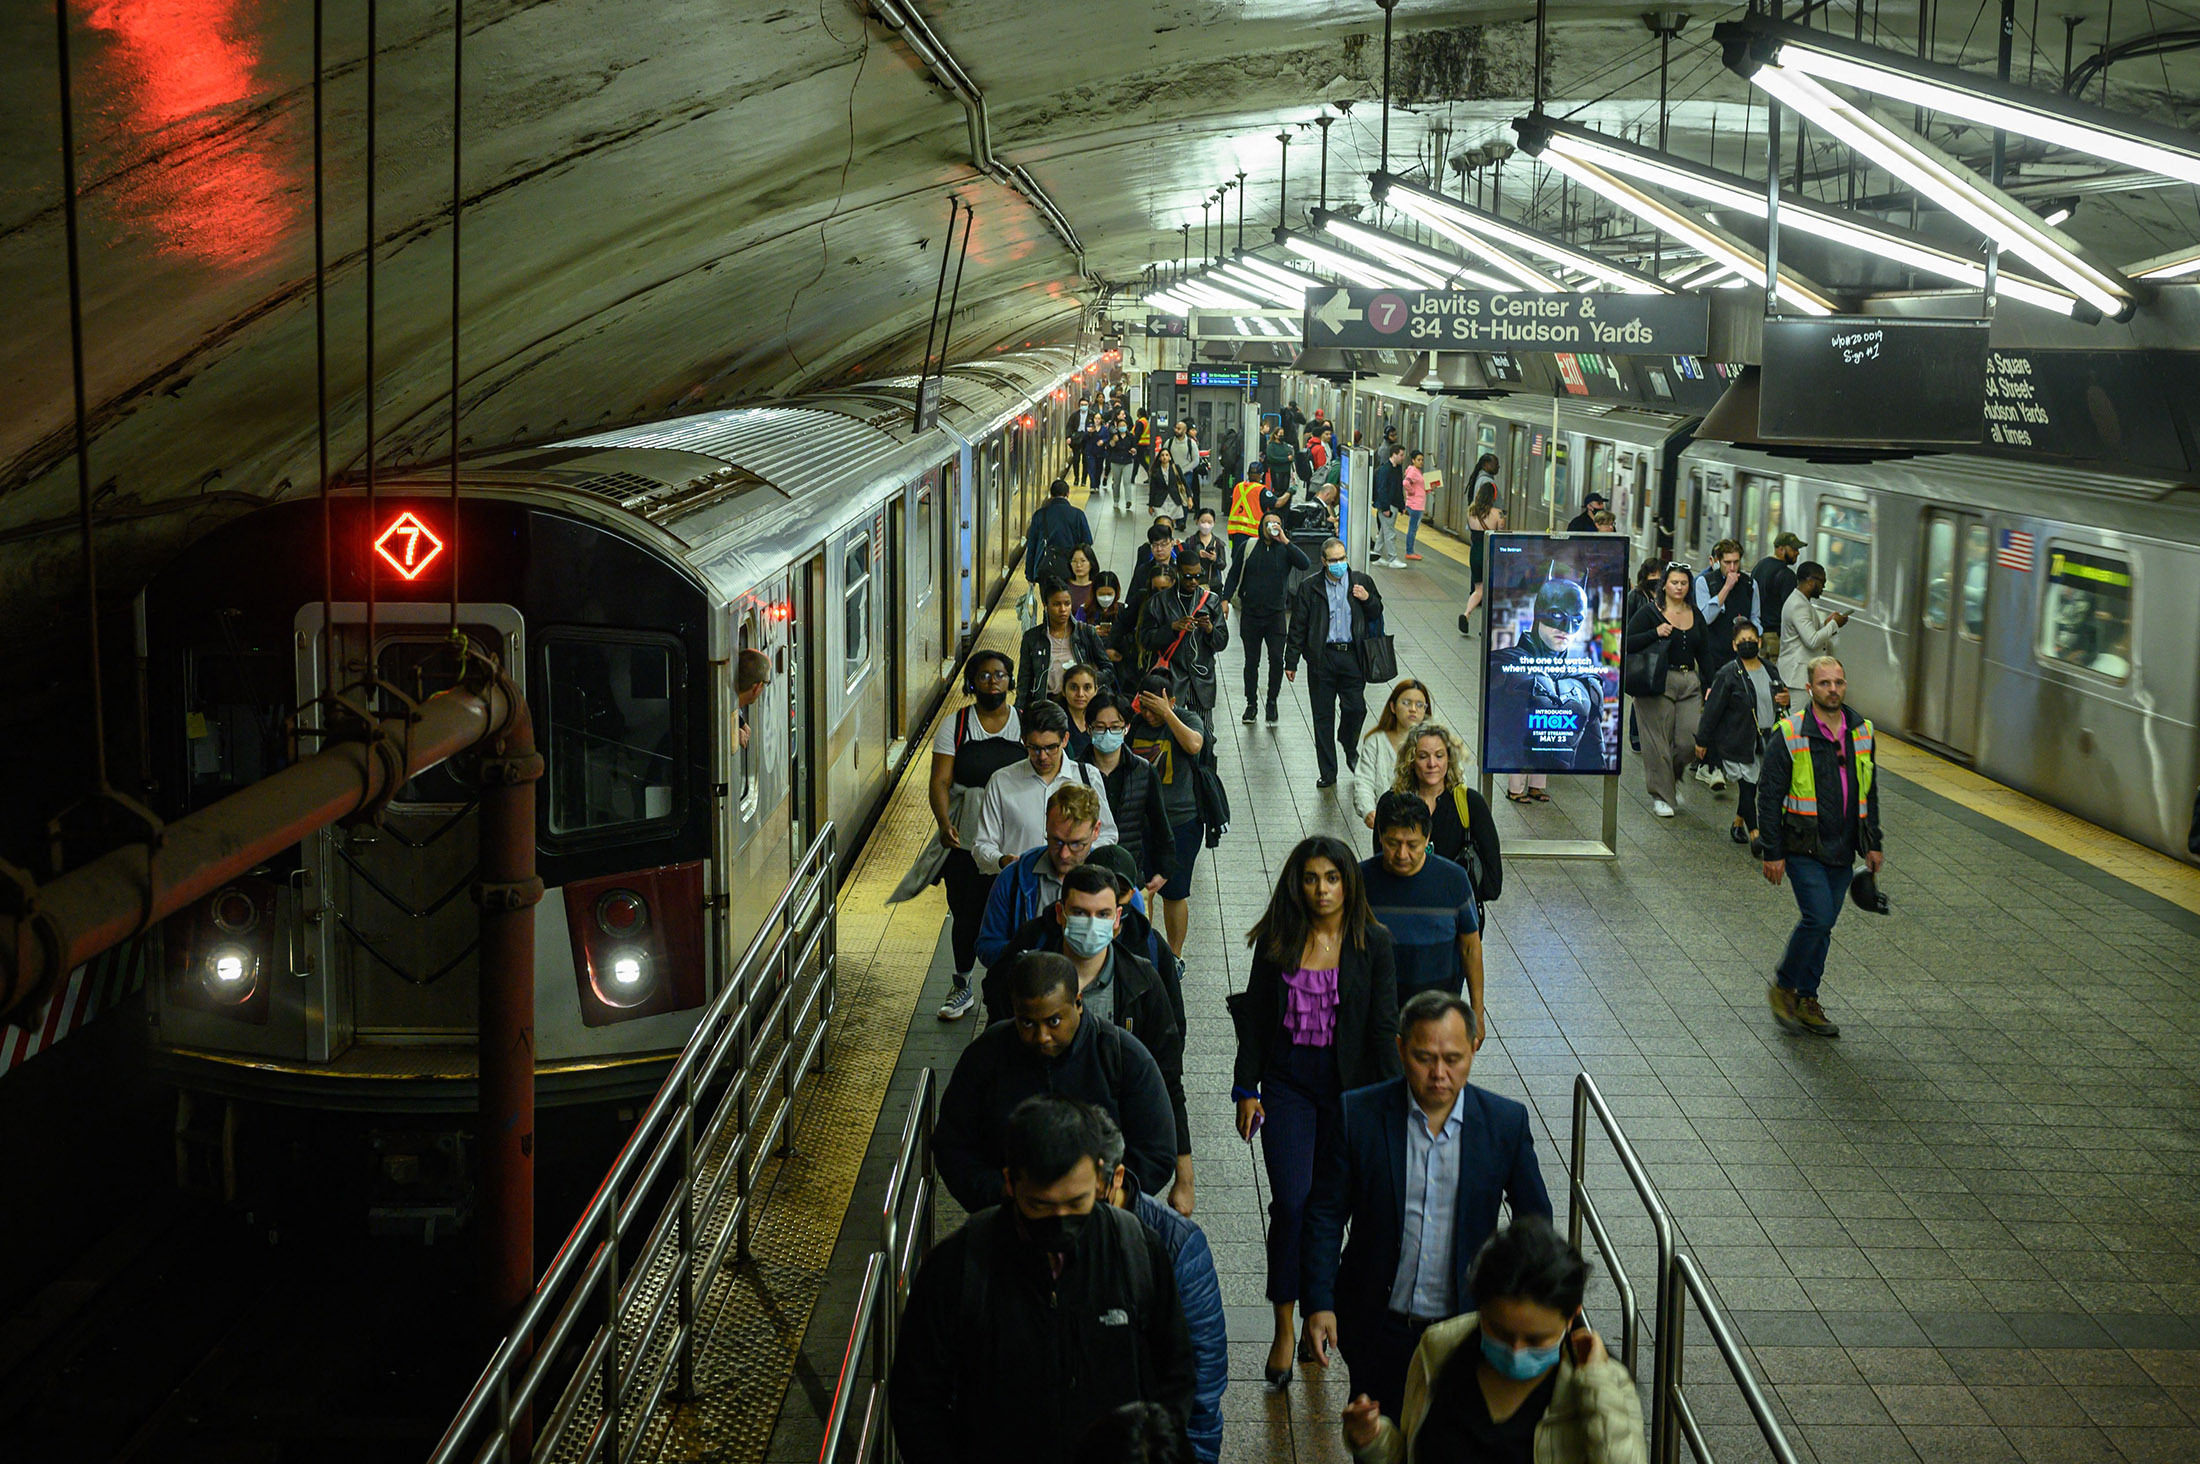 Urban Mass Transit: The Life Story of a Technology